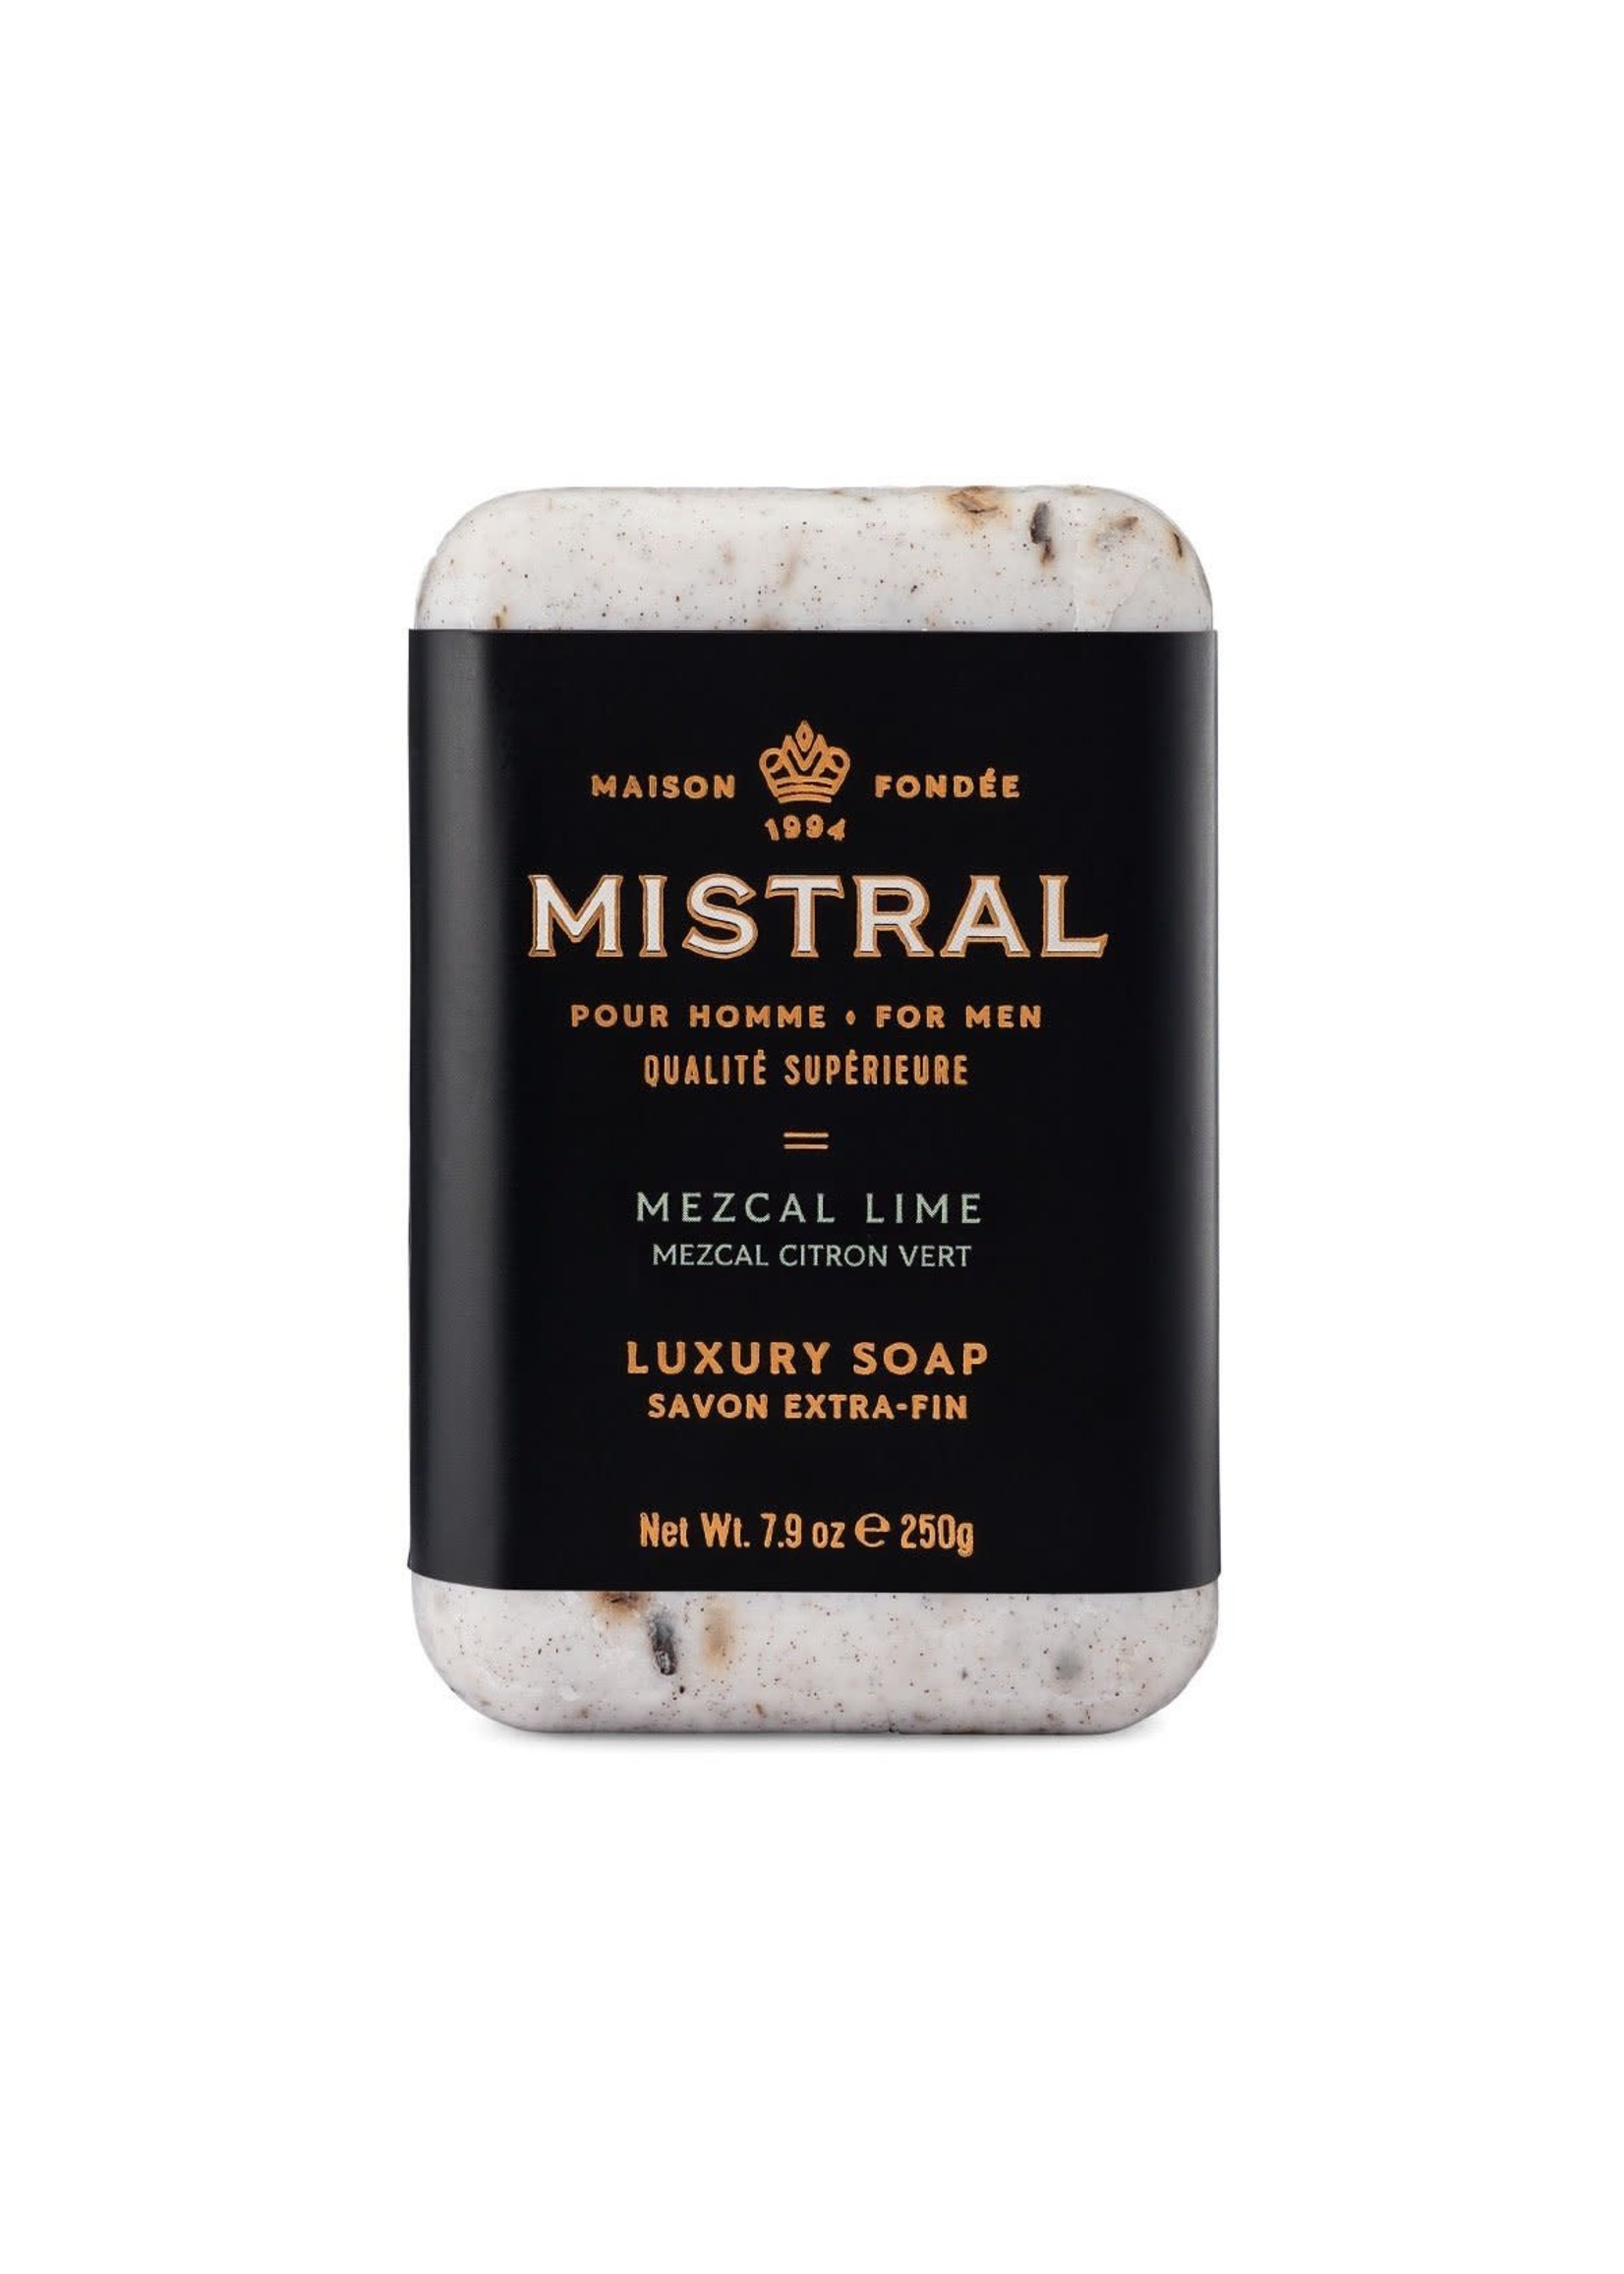 Mistral MISTRAL savon - Mezcal Citron Vert